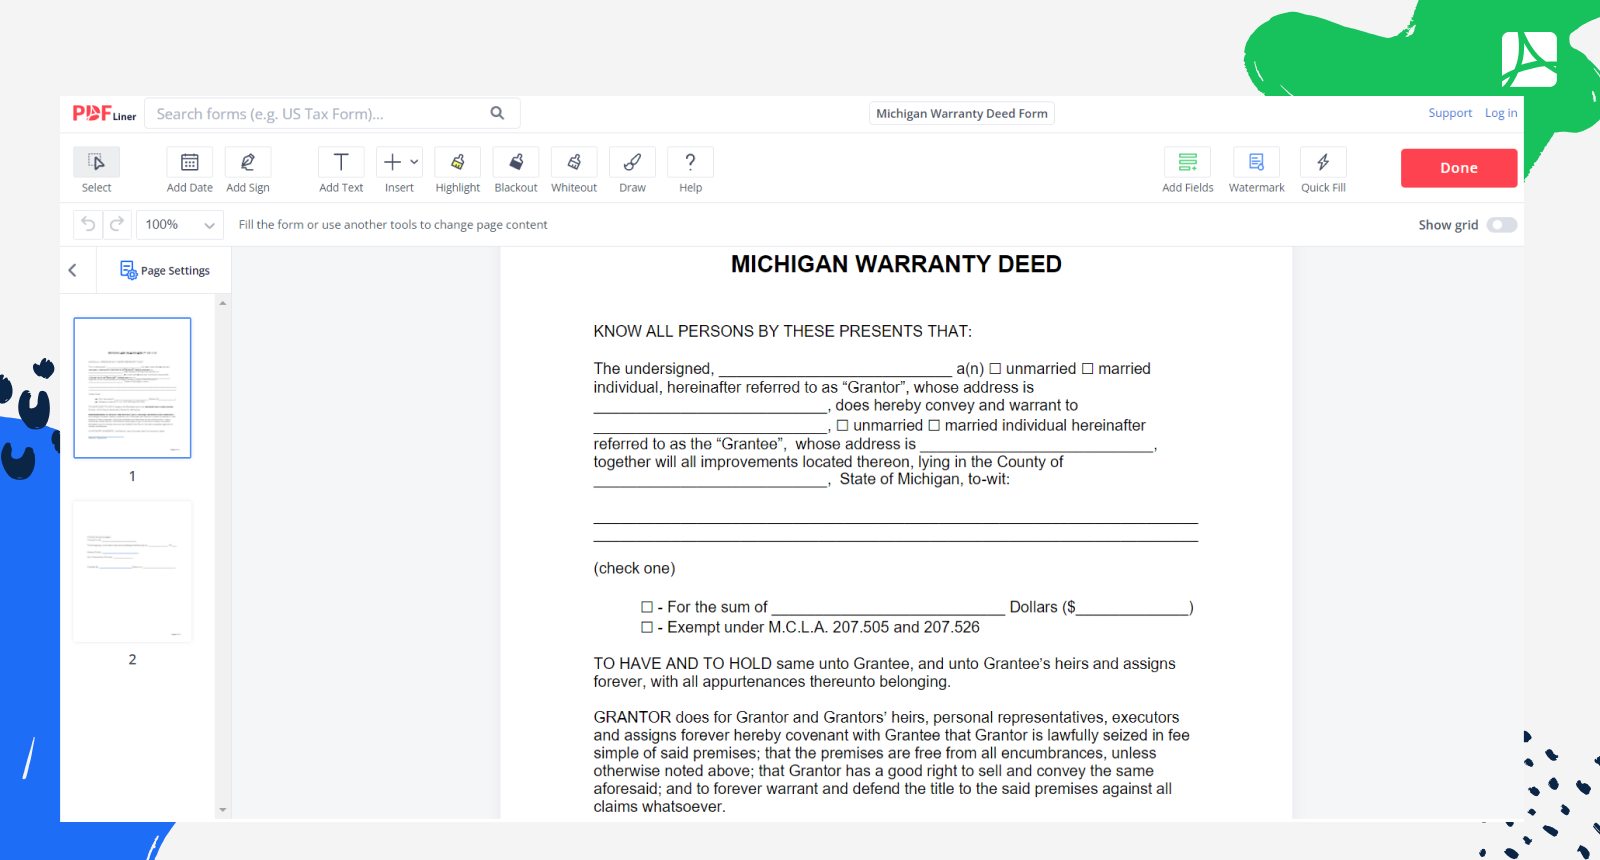 Michigan Warranty Deed Form Screenshot